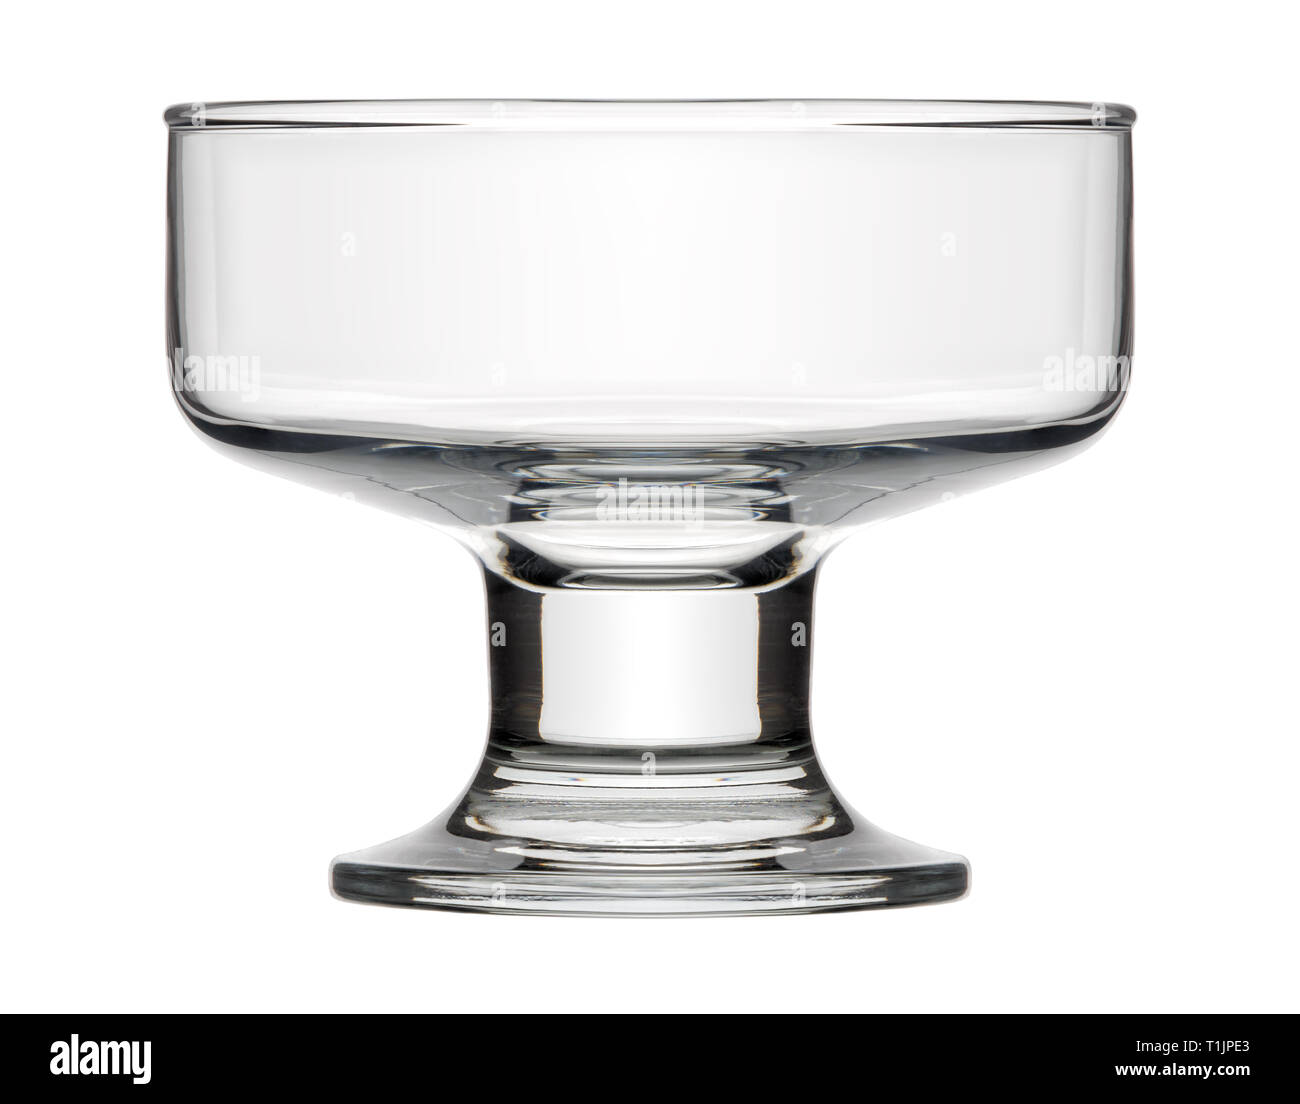 Isolated objects: single empty dessert bowl, on white background Stock Photo